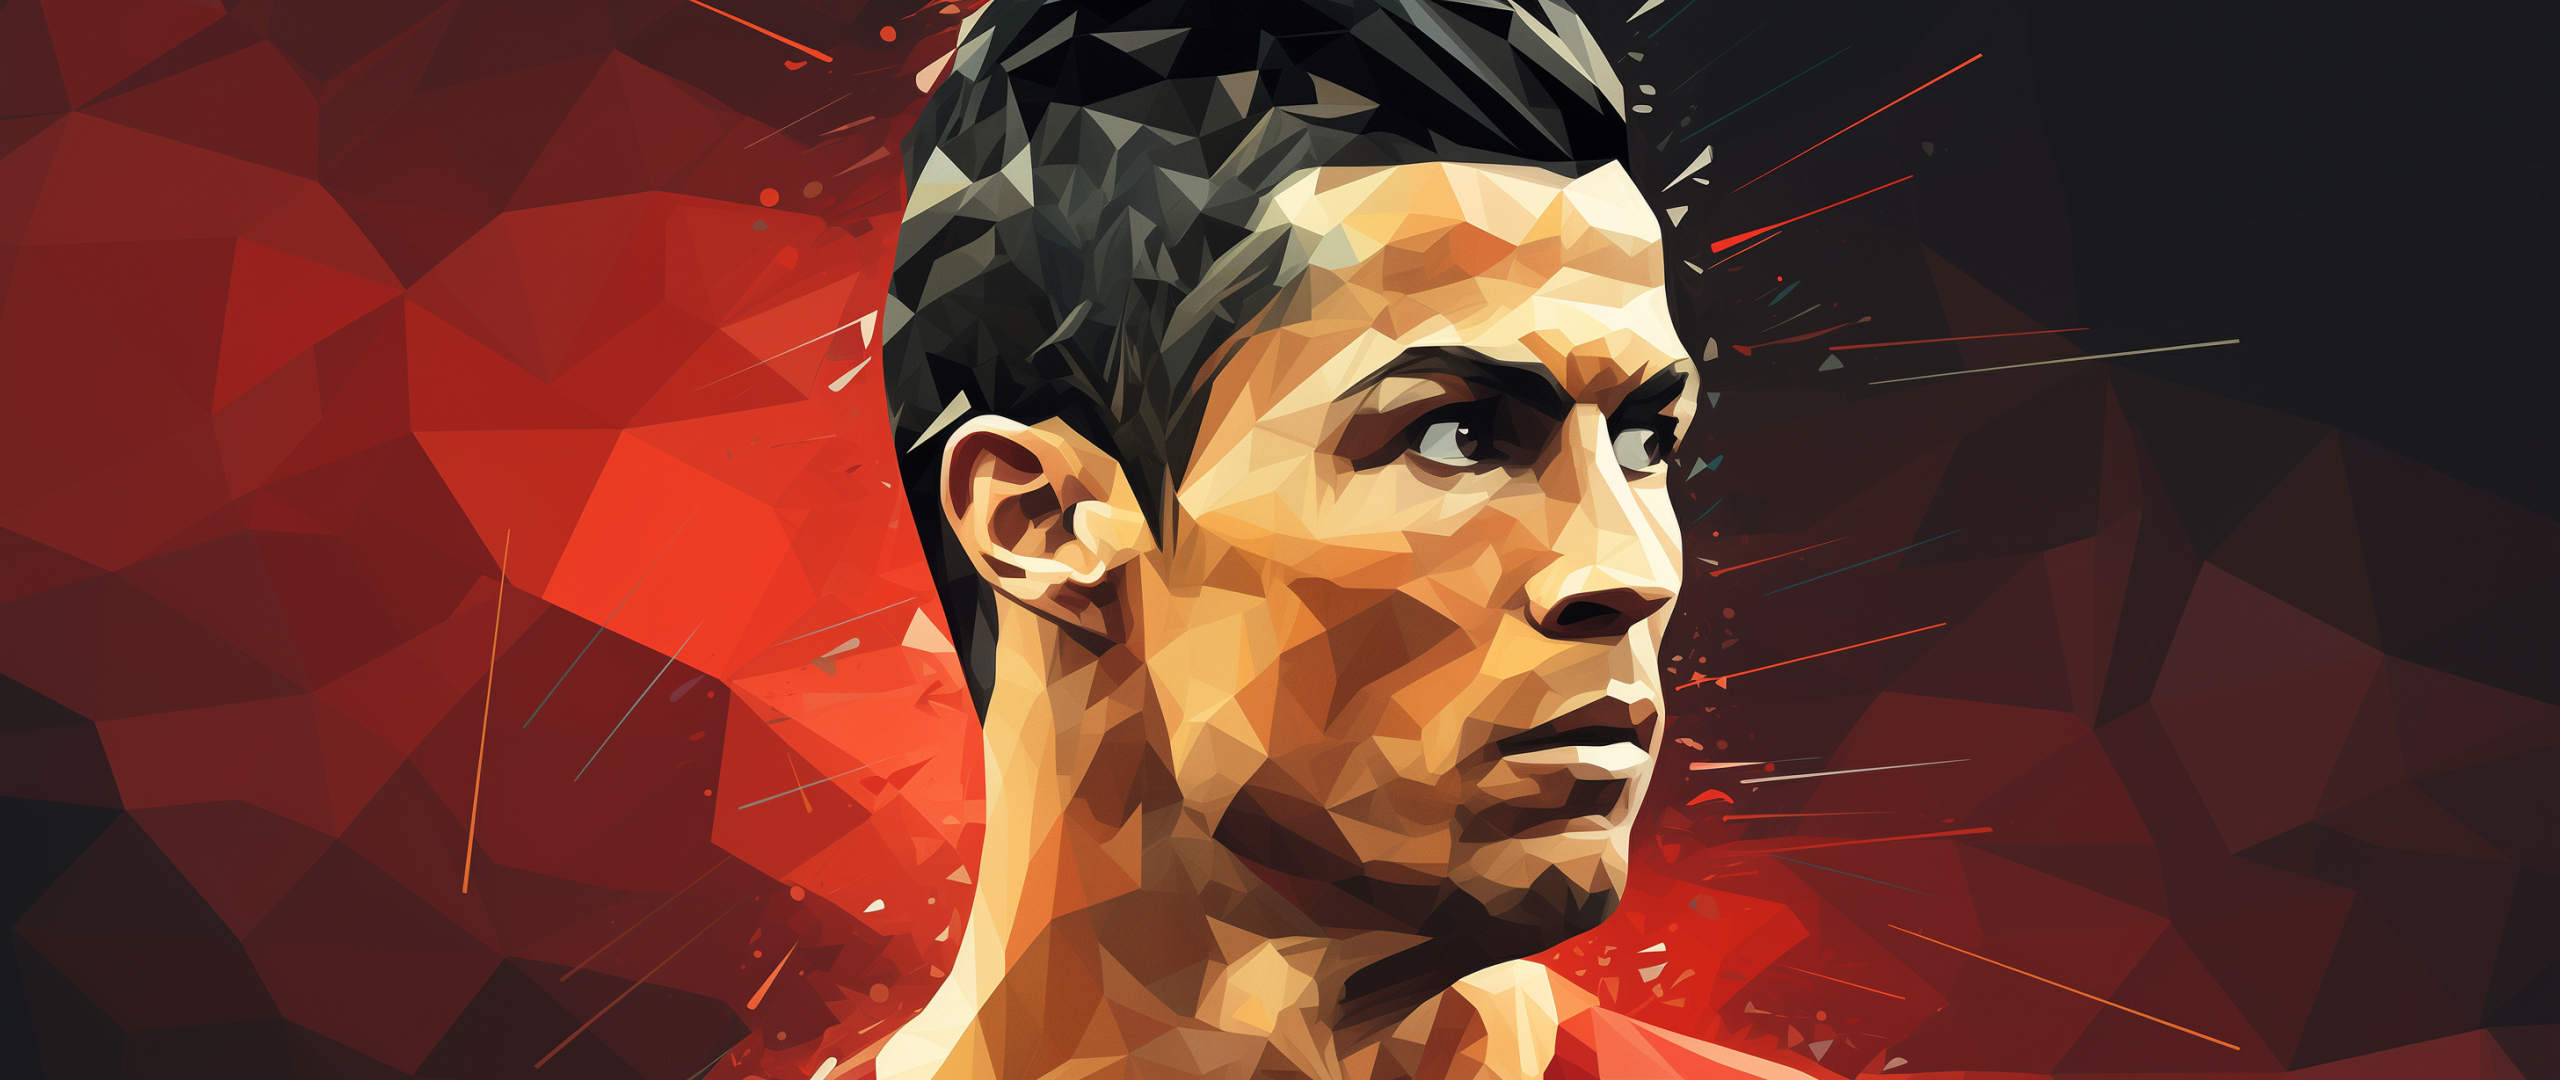 2560x1080 Resolution Cristiano Ronaldo in Barcelona Paint Art 2560x1080 ...